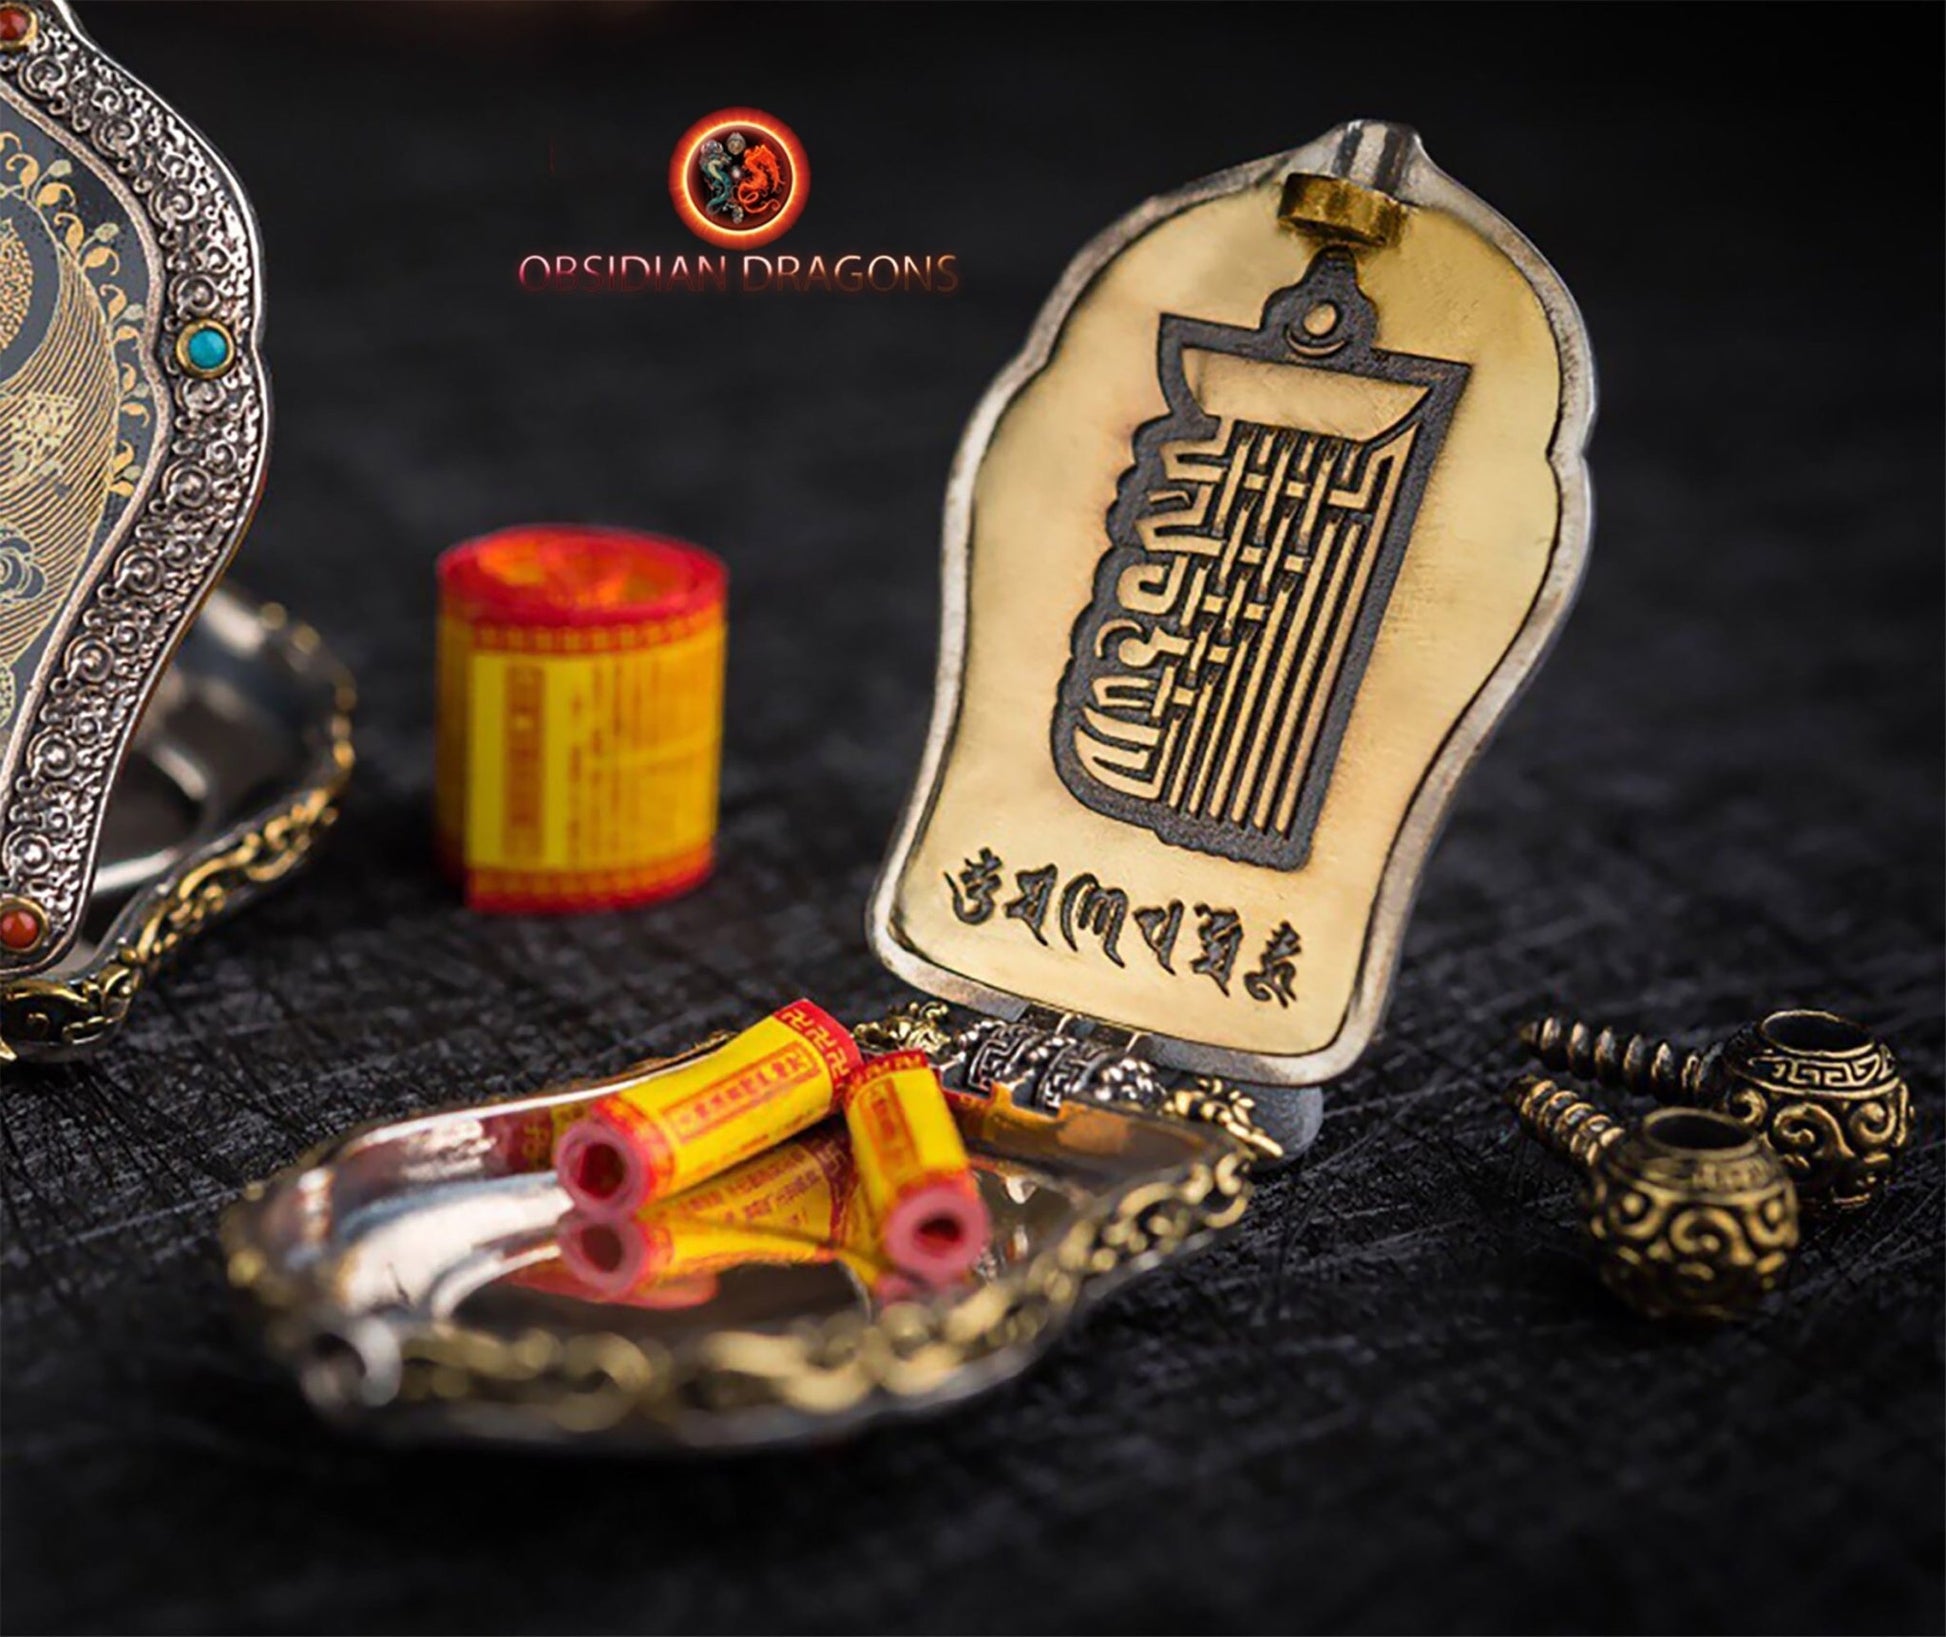 Pendentif Bouddha. Tara verte. Ghau, amulette de protection tibétaine. Véritable tangka artisanal - obsidian dragon